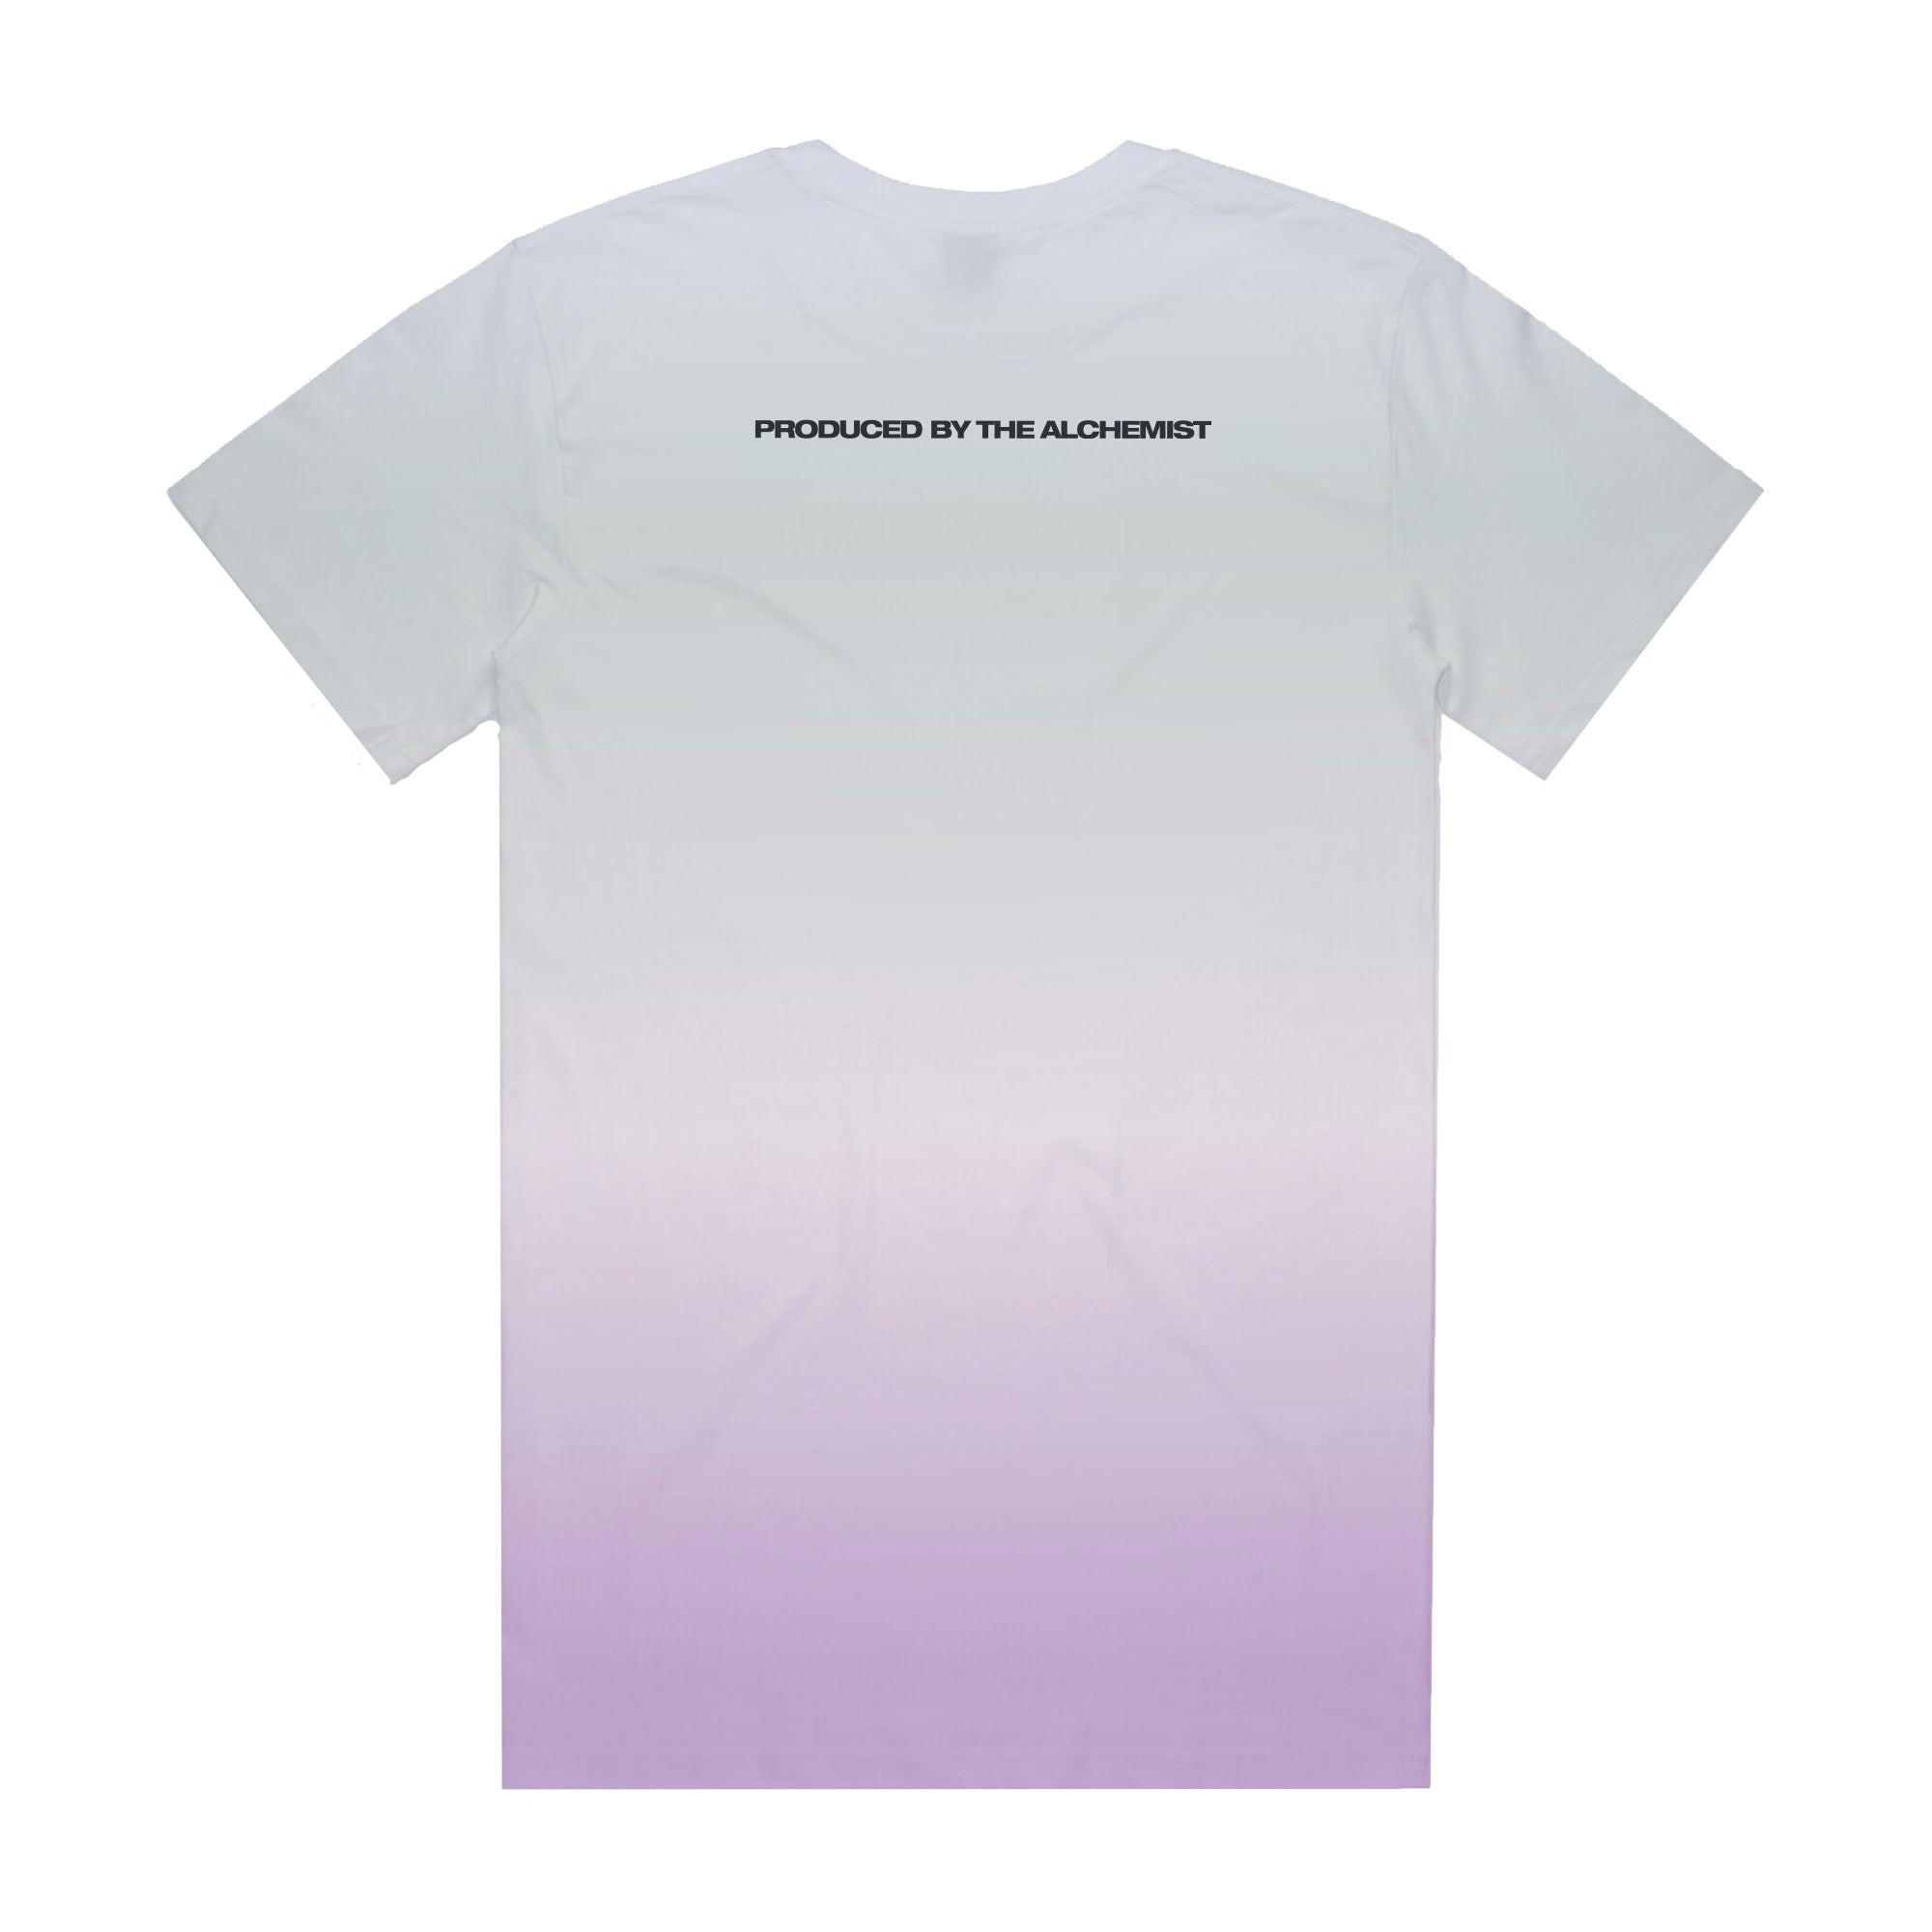 ALC Records Dip Dye (Shortsleeve Shirt)